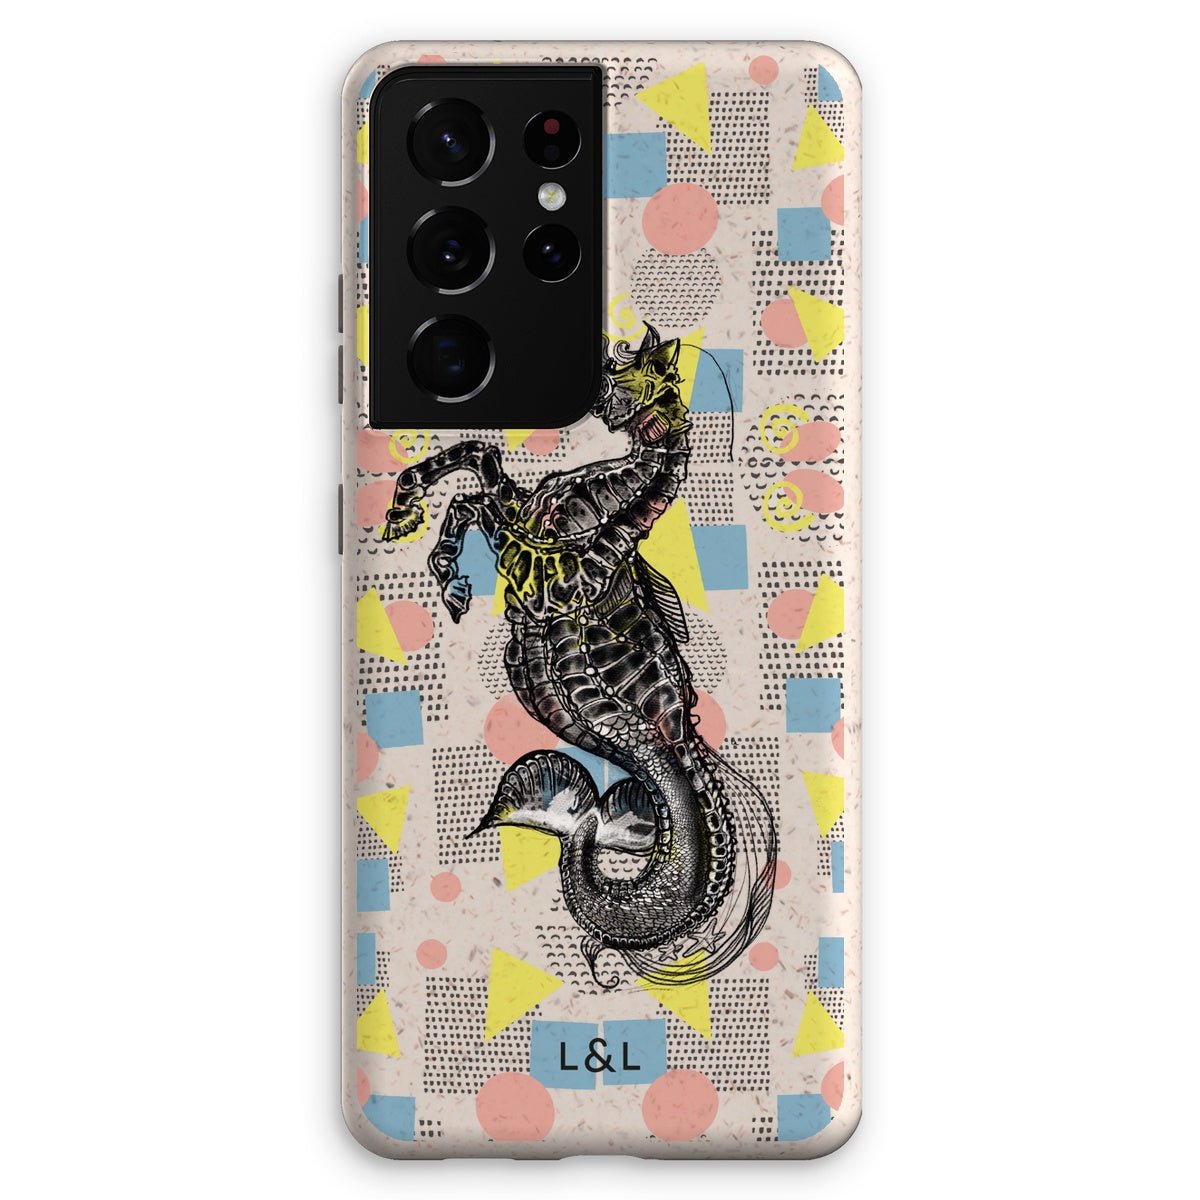 Kelpie with pattern Eco Phone Case - Loam & Lore